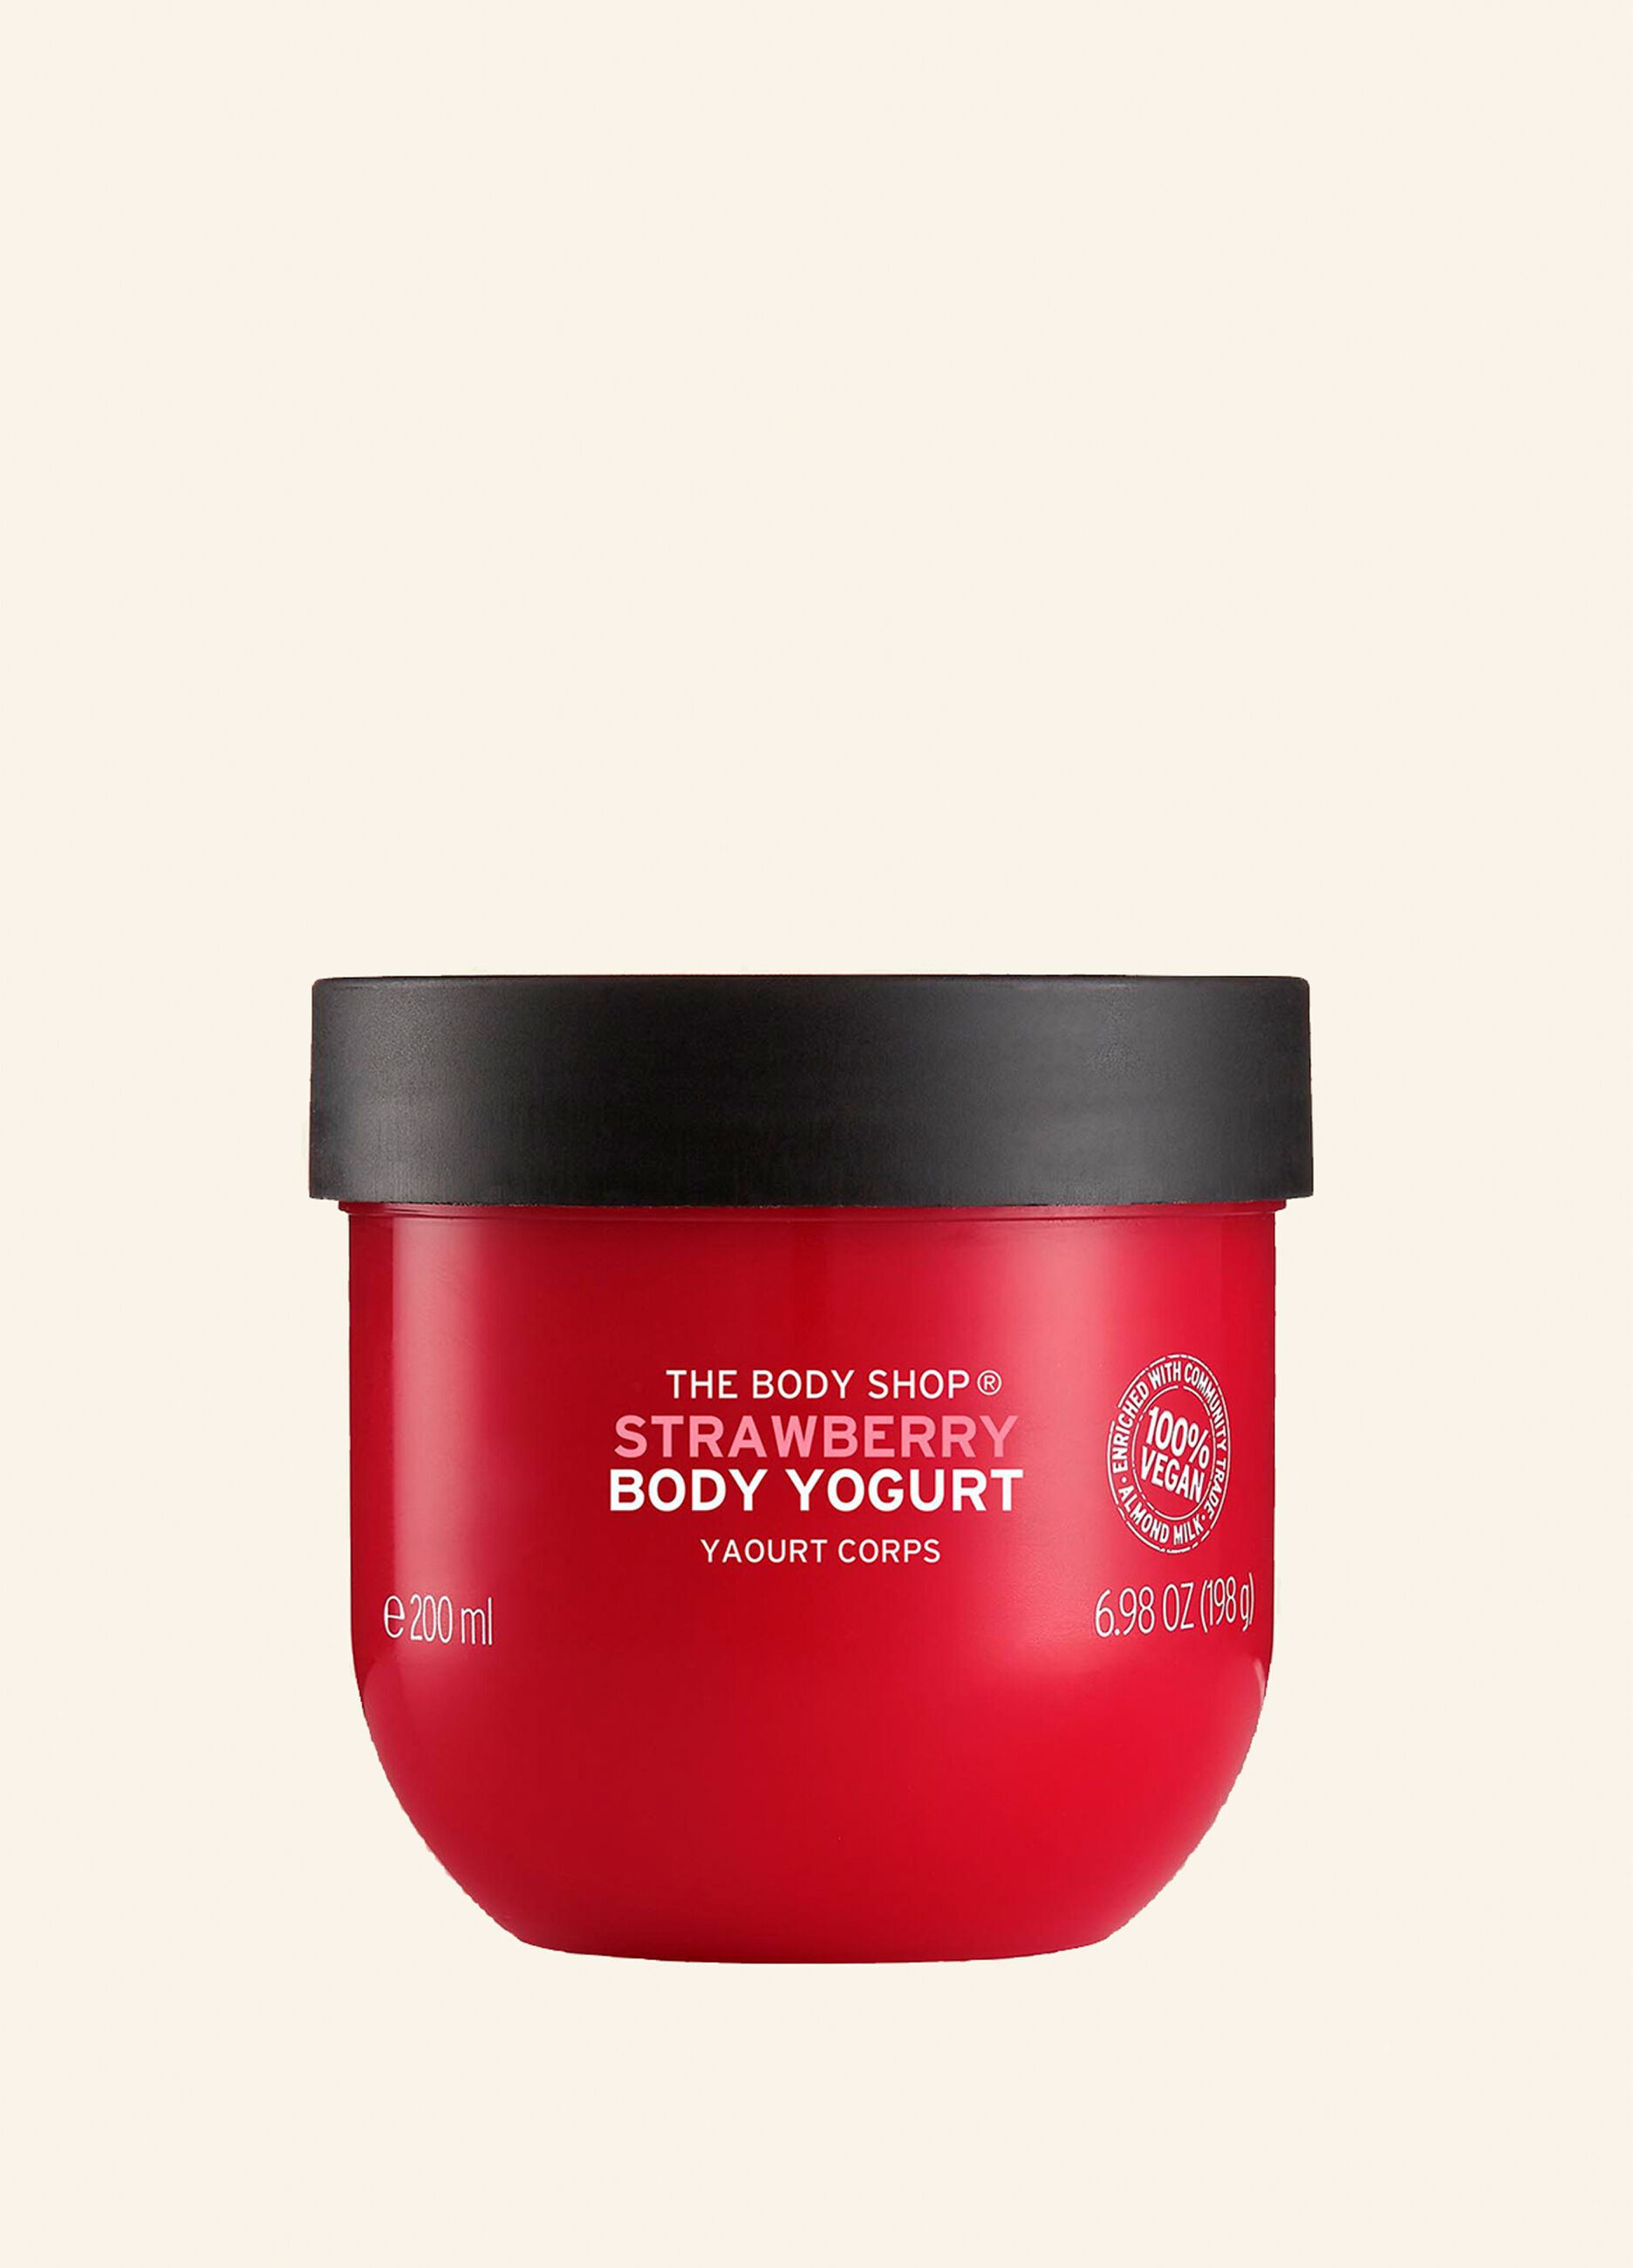 The Body Shop strawberry body yoghurt 200ml